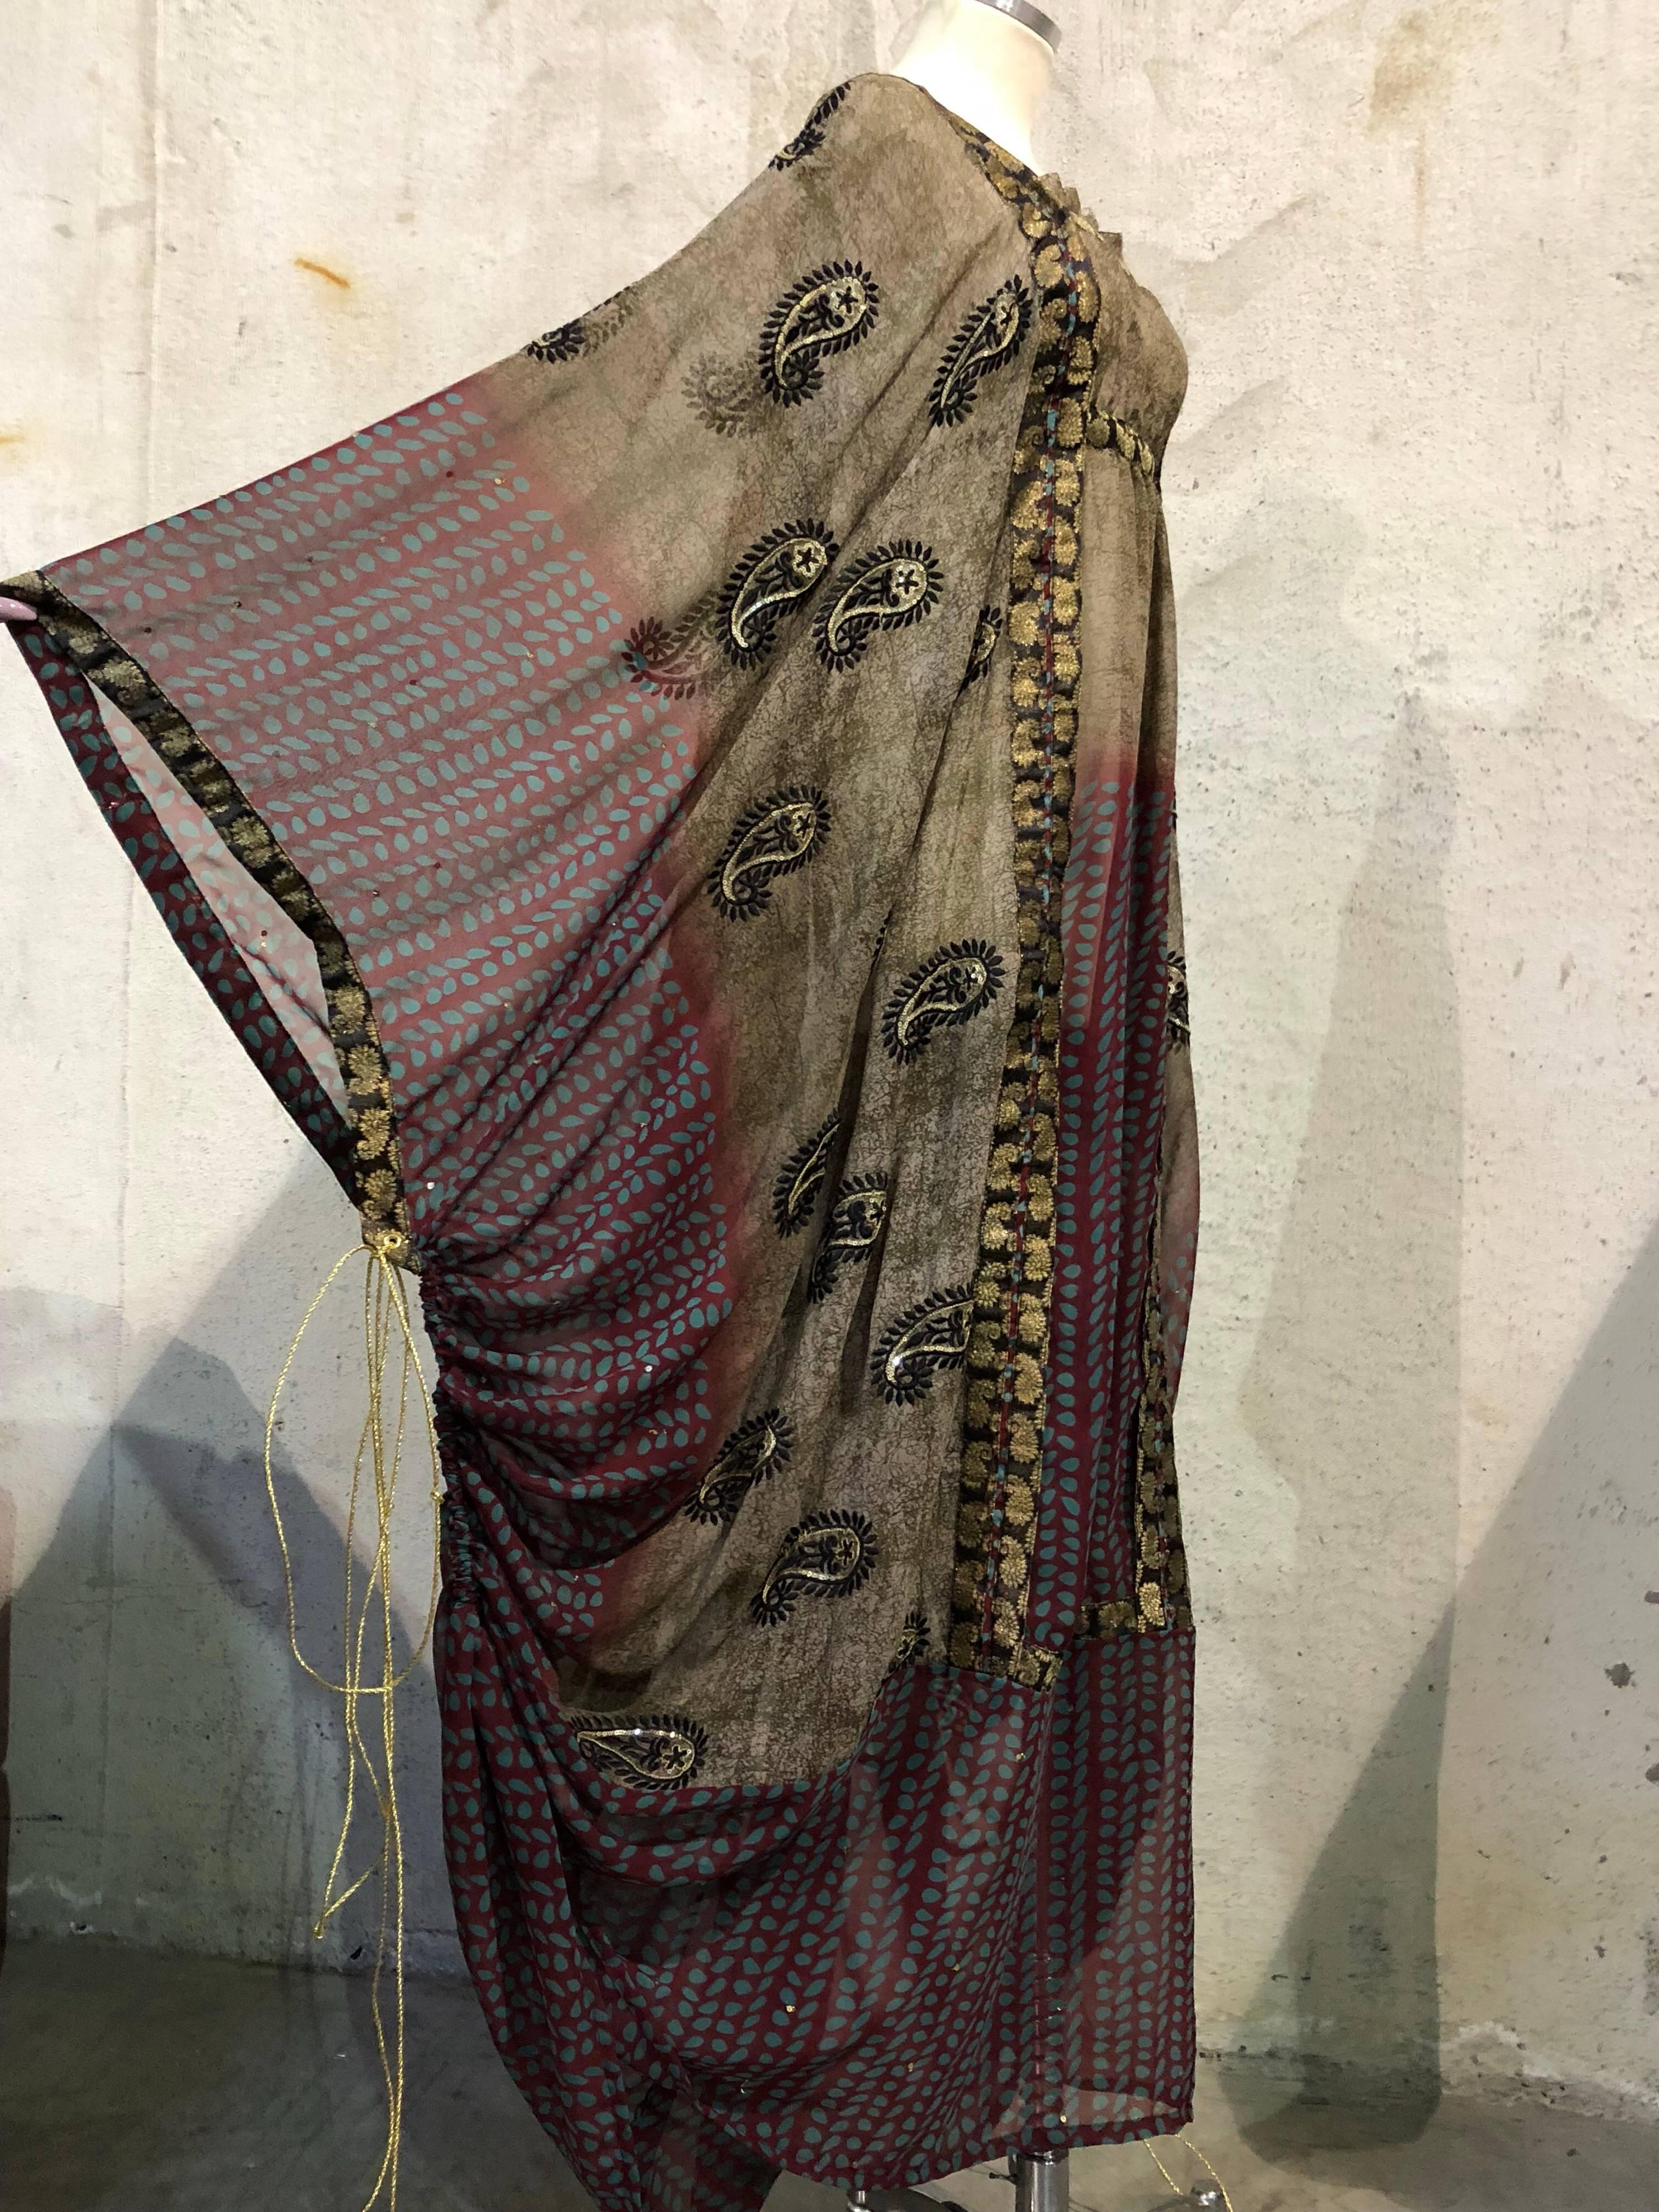 dresses made from sari fabric